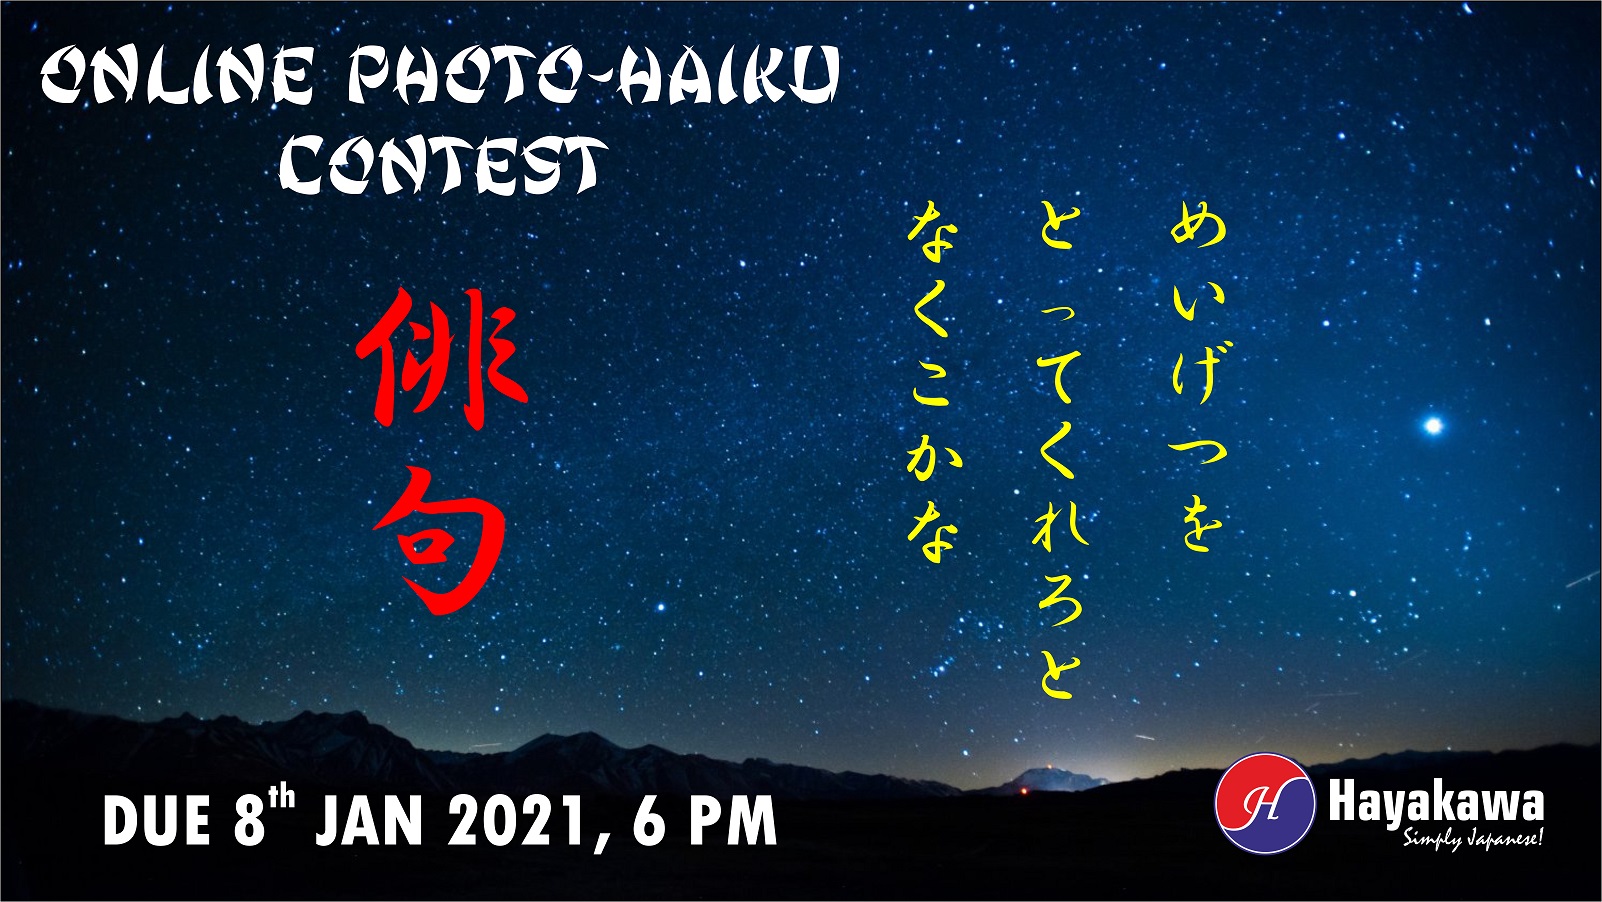 Online Photo-Haiku Contest 2021